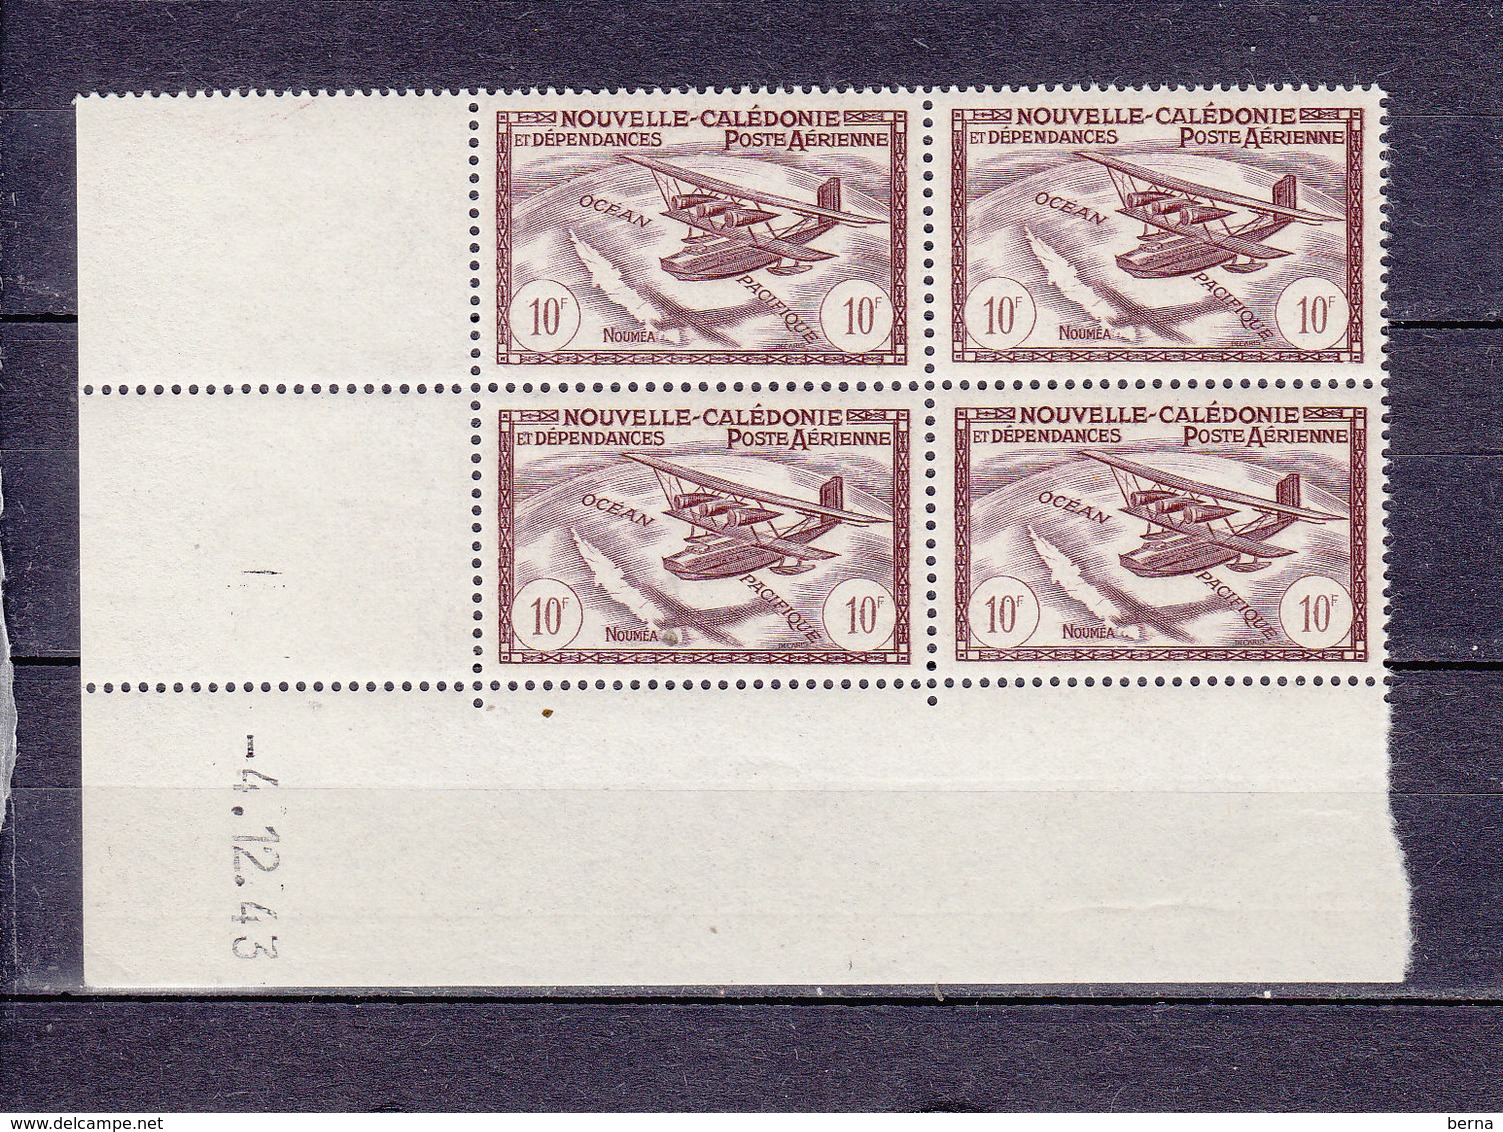 NOUVELLE CALEDONIE POSTE AERIENNE 43  BLOC DE 4  COIN DATE 4.12.43  LUXE NEUF SANS CHARNIERE - Unused Stamps